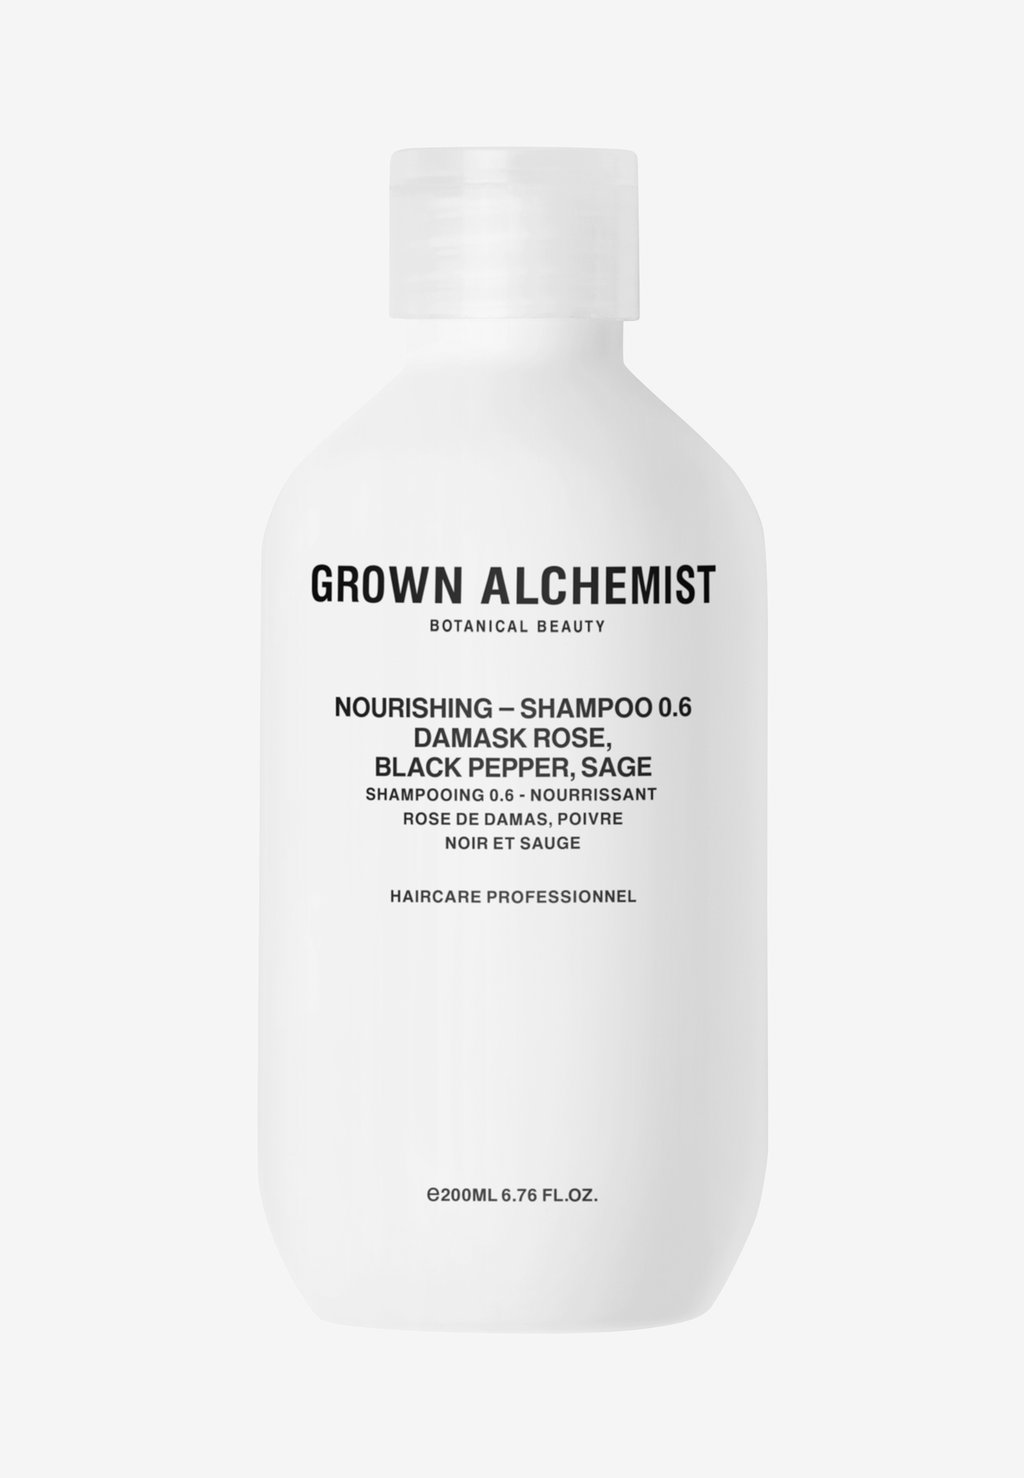 Шампунь Nourishing-Shampoo 0.6 Damask Rose, Black Pepper, Sage Grown Alchemist